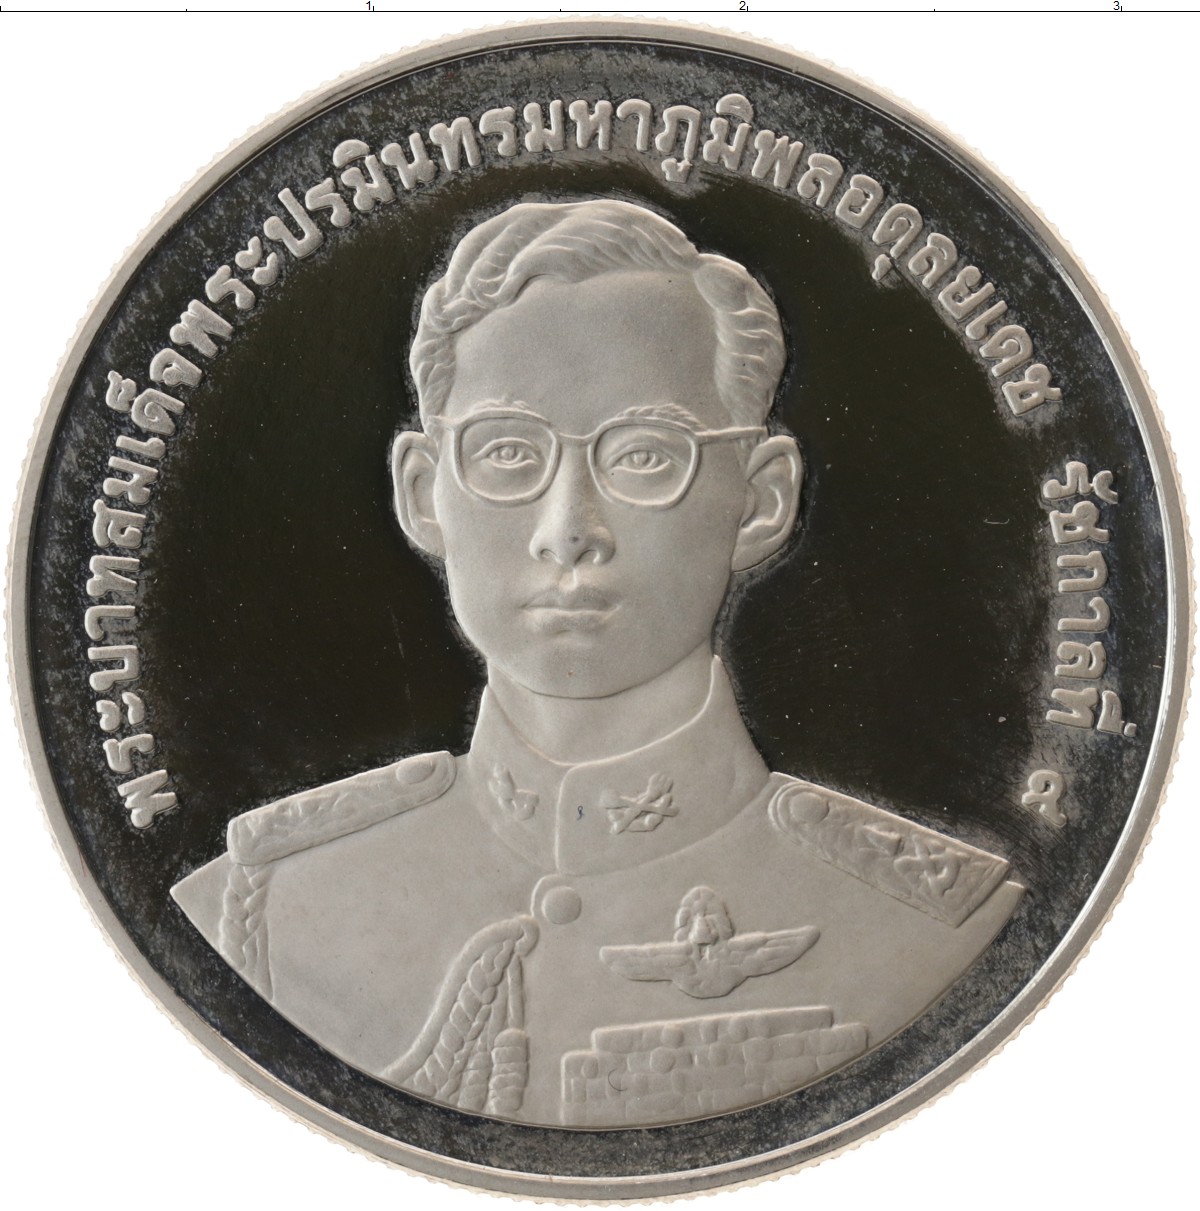 600 бат. Монета 20 бат. Монета 20 Батов Таиланда. Монеты Тайланда. Таиланд 1 бат 1998 год.